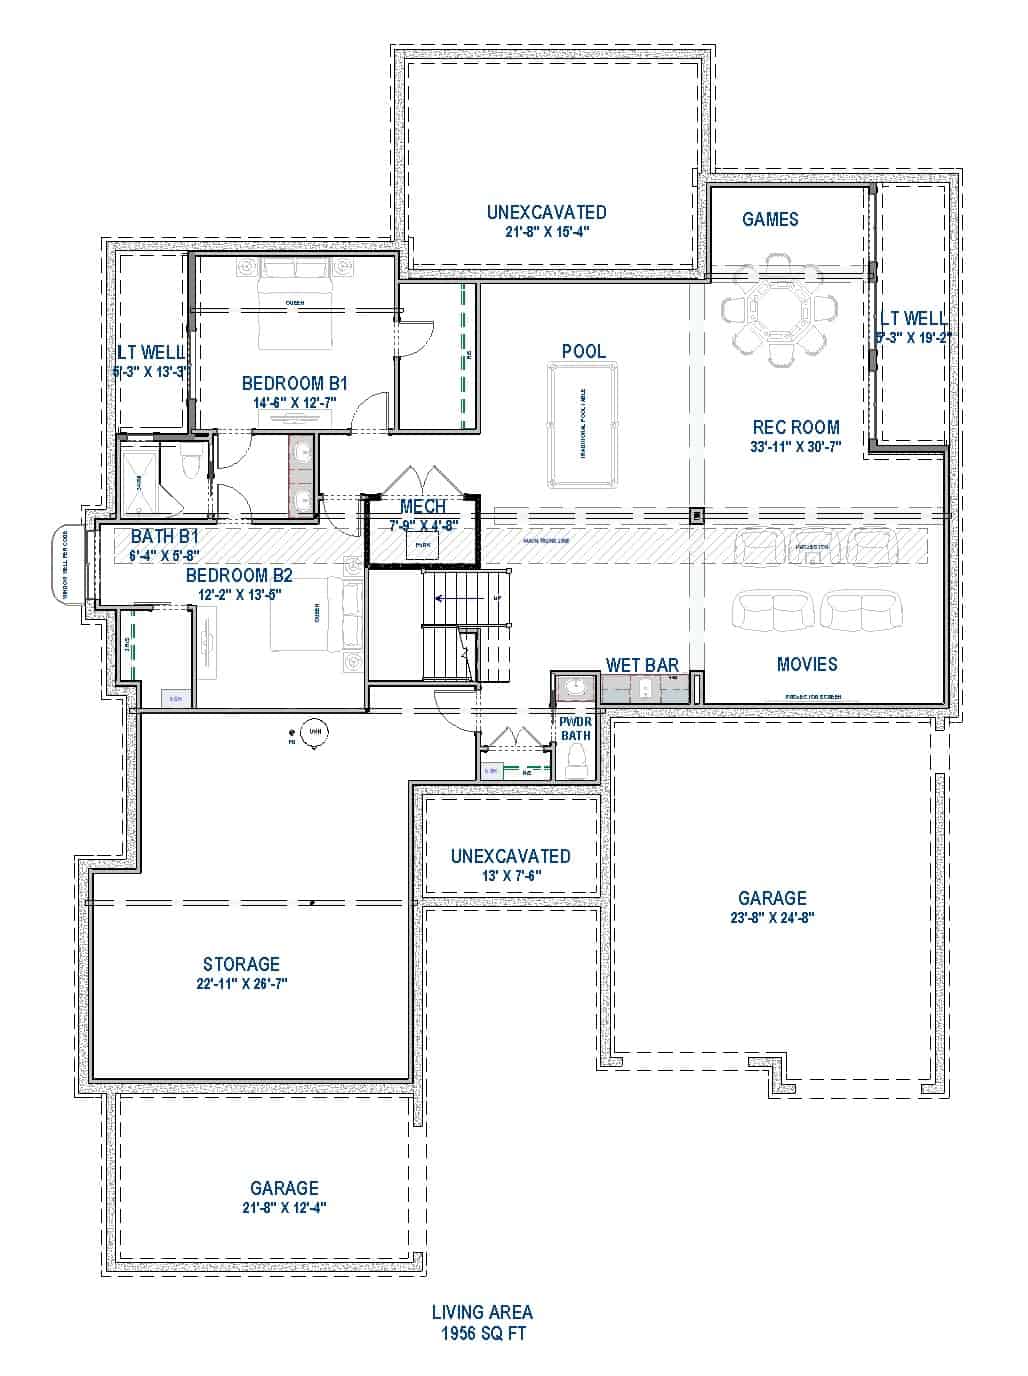 Contemporary House Plan - 5 Bedrms, 3.5 Baths - 4576 Sq Ft - #194-1060